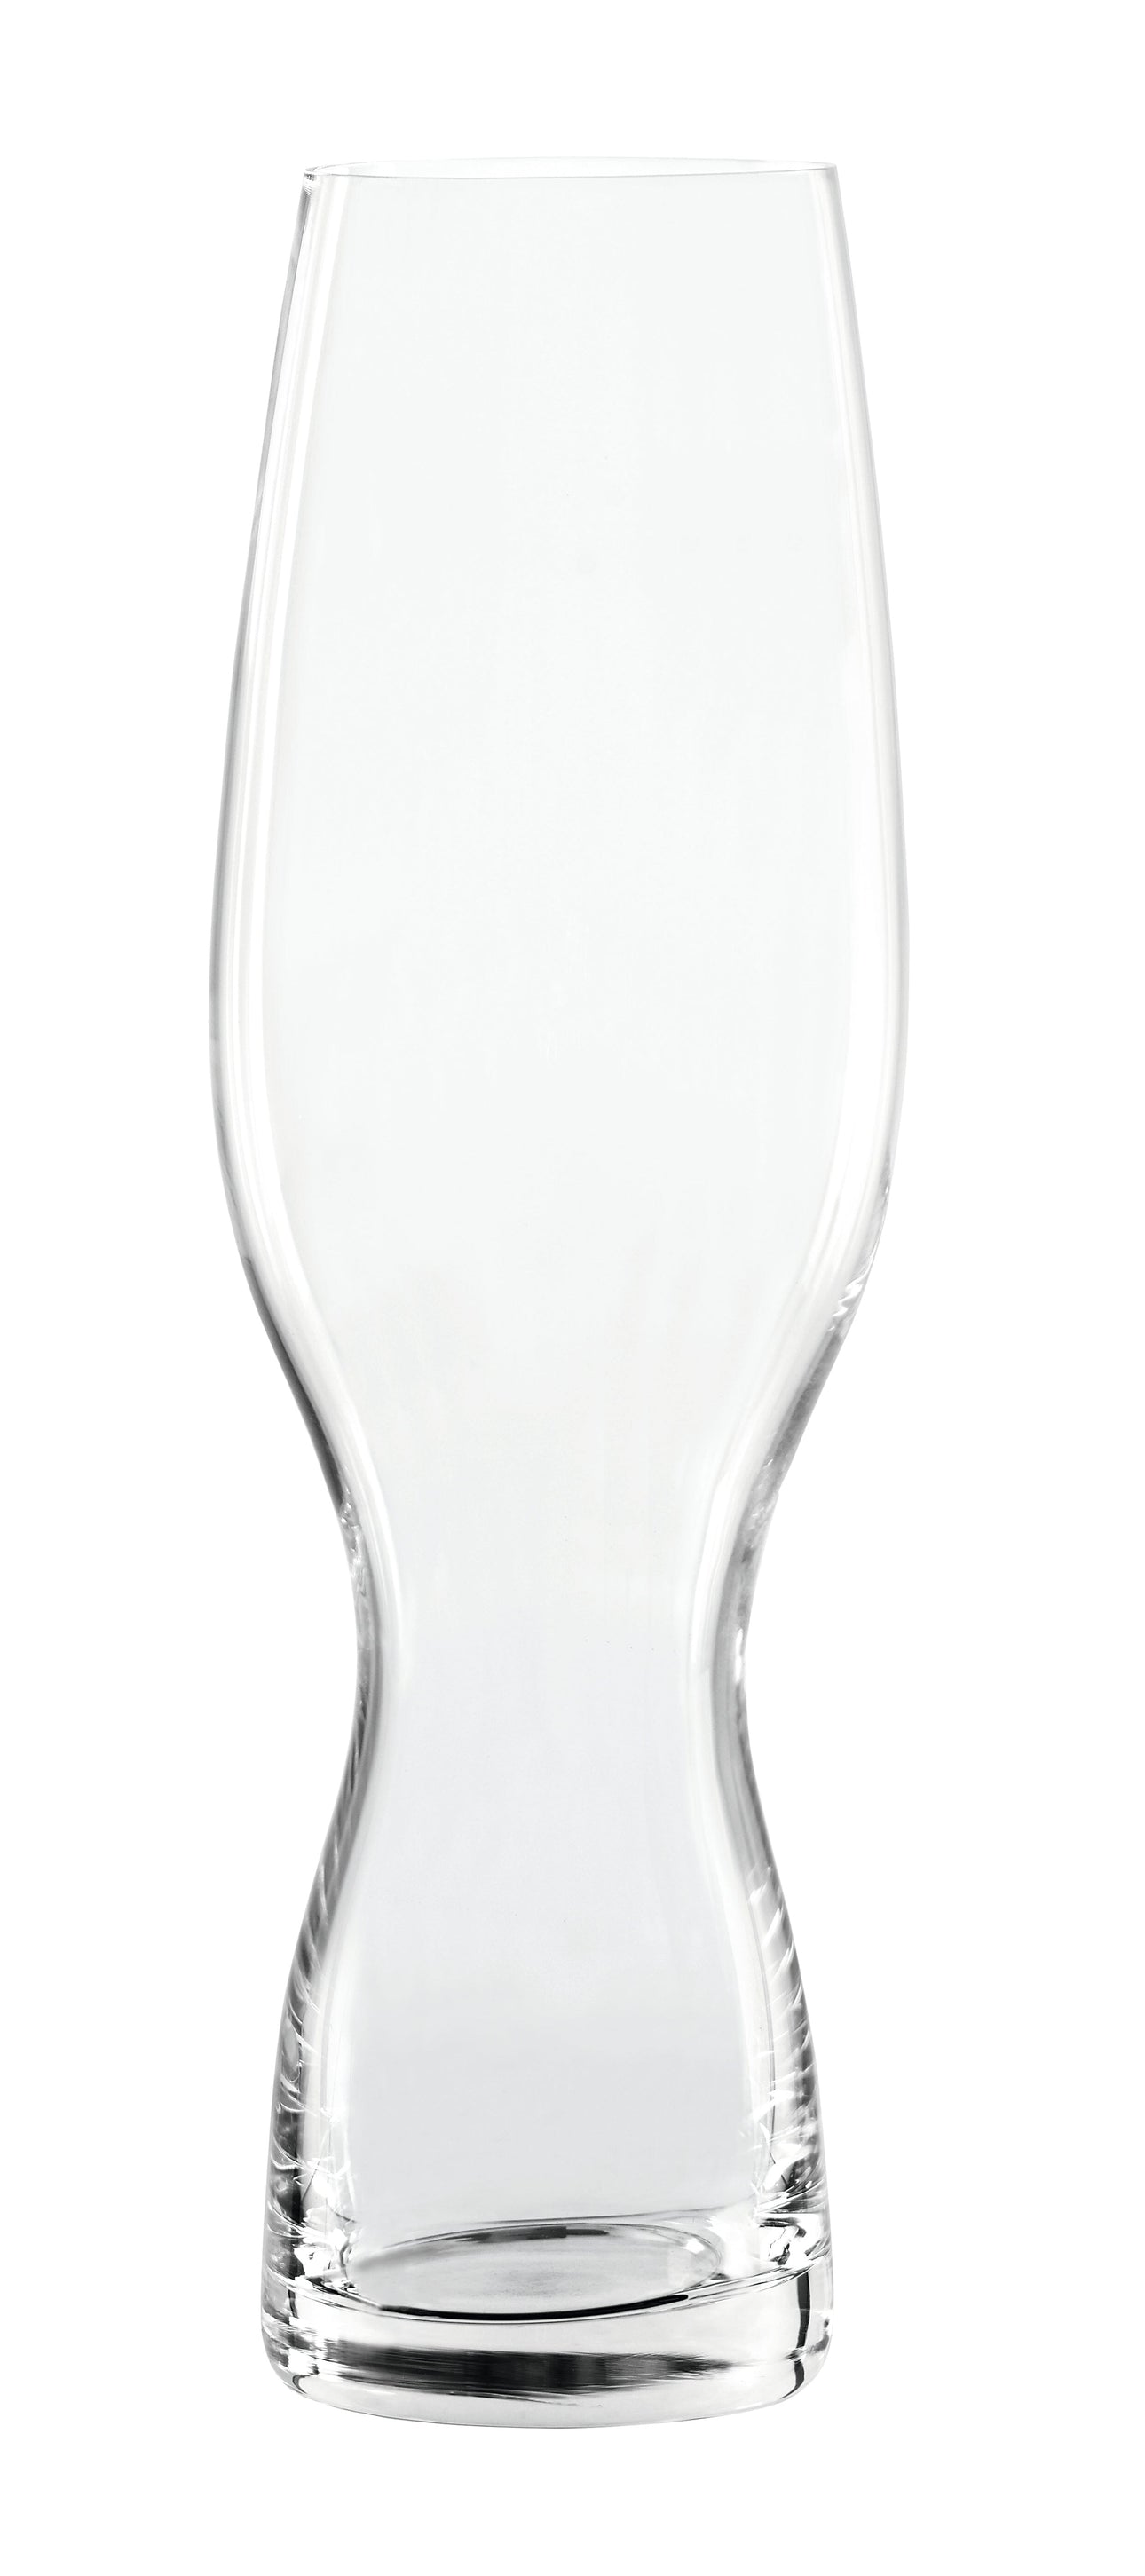 Spiegelau 12.8 oz pilsner glass (set of 4)